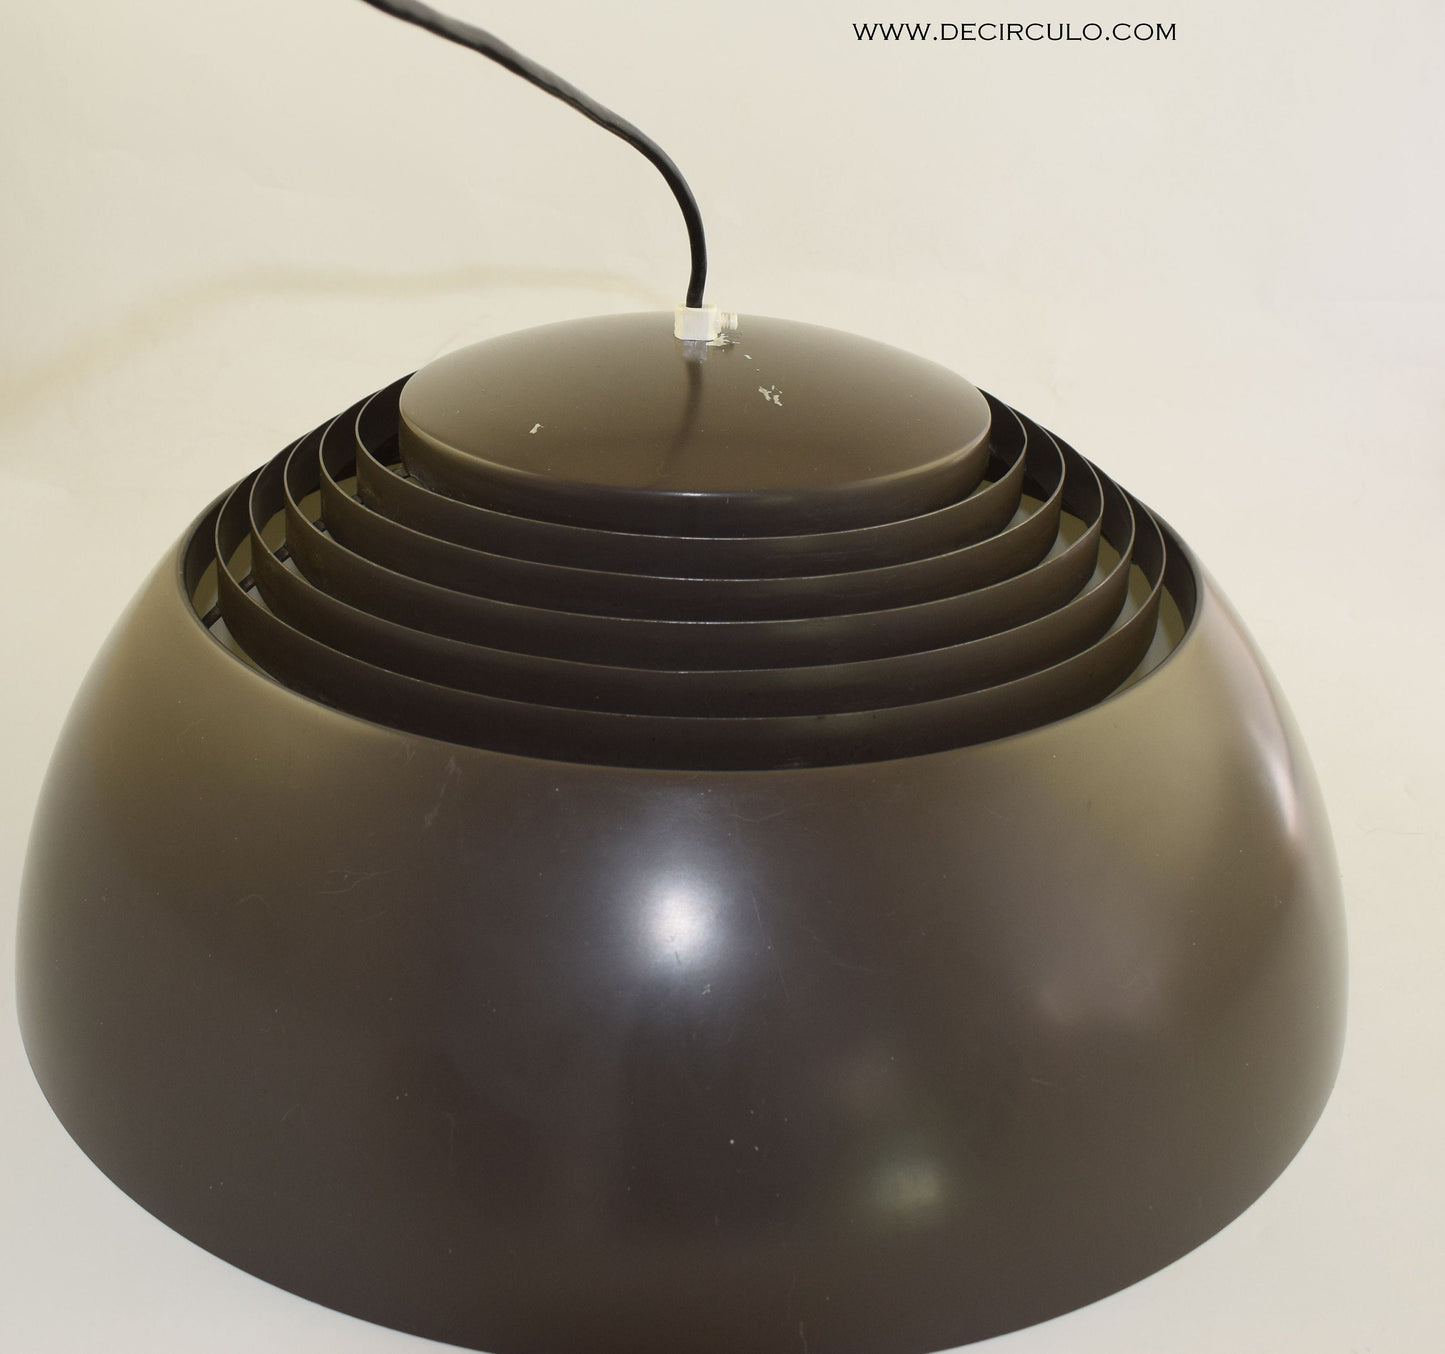 Arne Jacobsen AJ Royal ceiling light, for Scandinavian manufacturer Louis Poulsen, known as AJ Royal Pendant dark brown/antracite